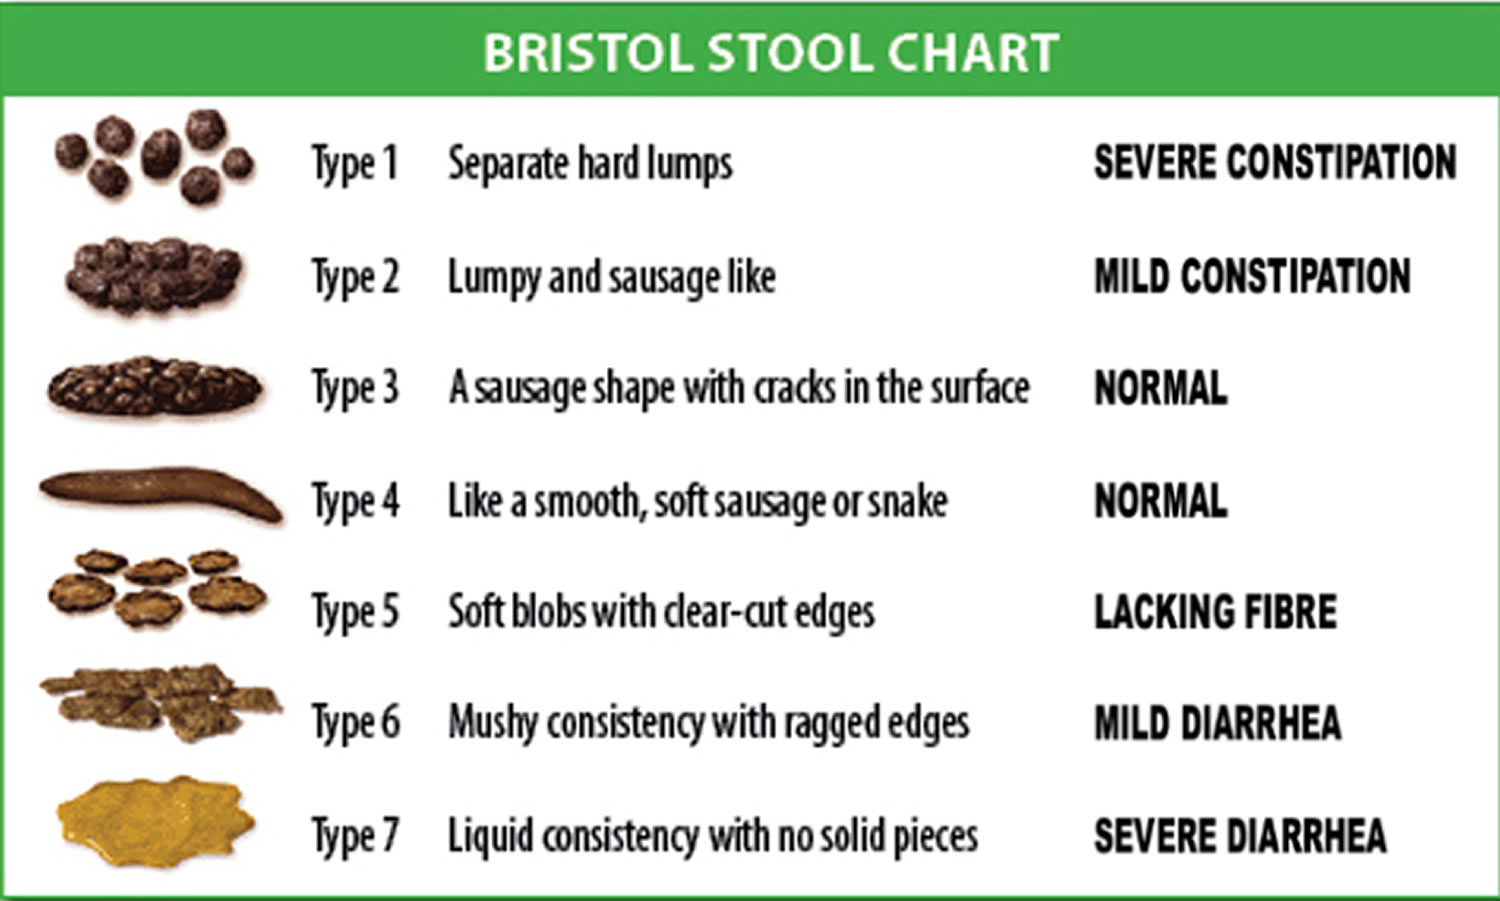 Bristol stool chart or Bristol stool scale